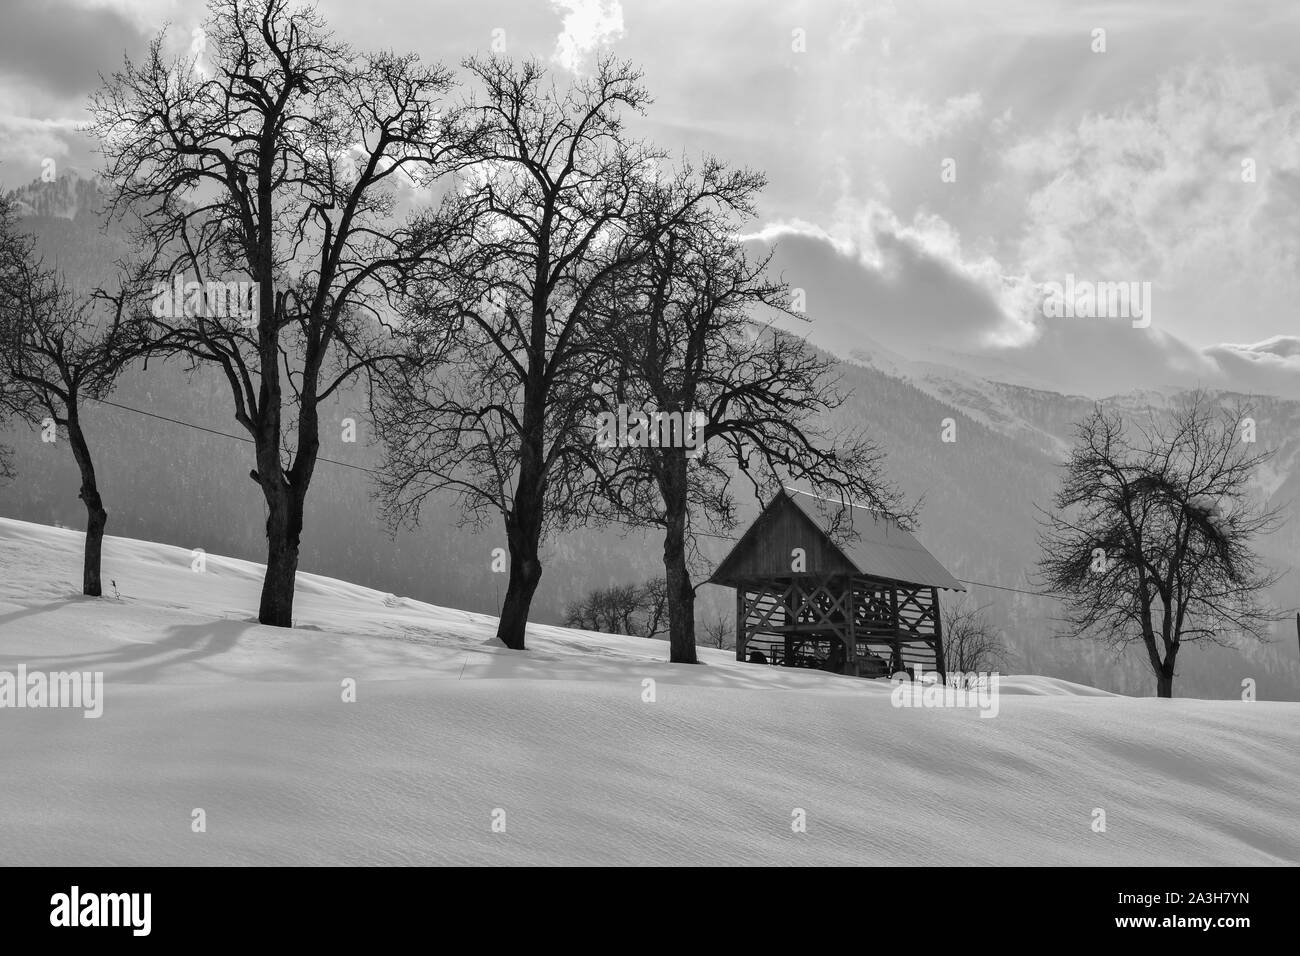 Winter, snowy scene in Slovenia in black and white. With old Slovenian hayrack and with old and high pear trees. Stock Photo